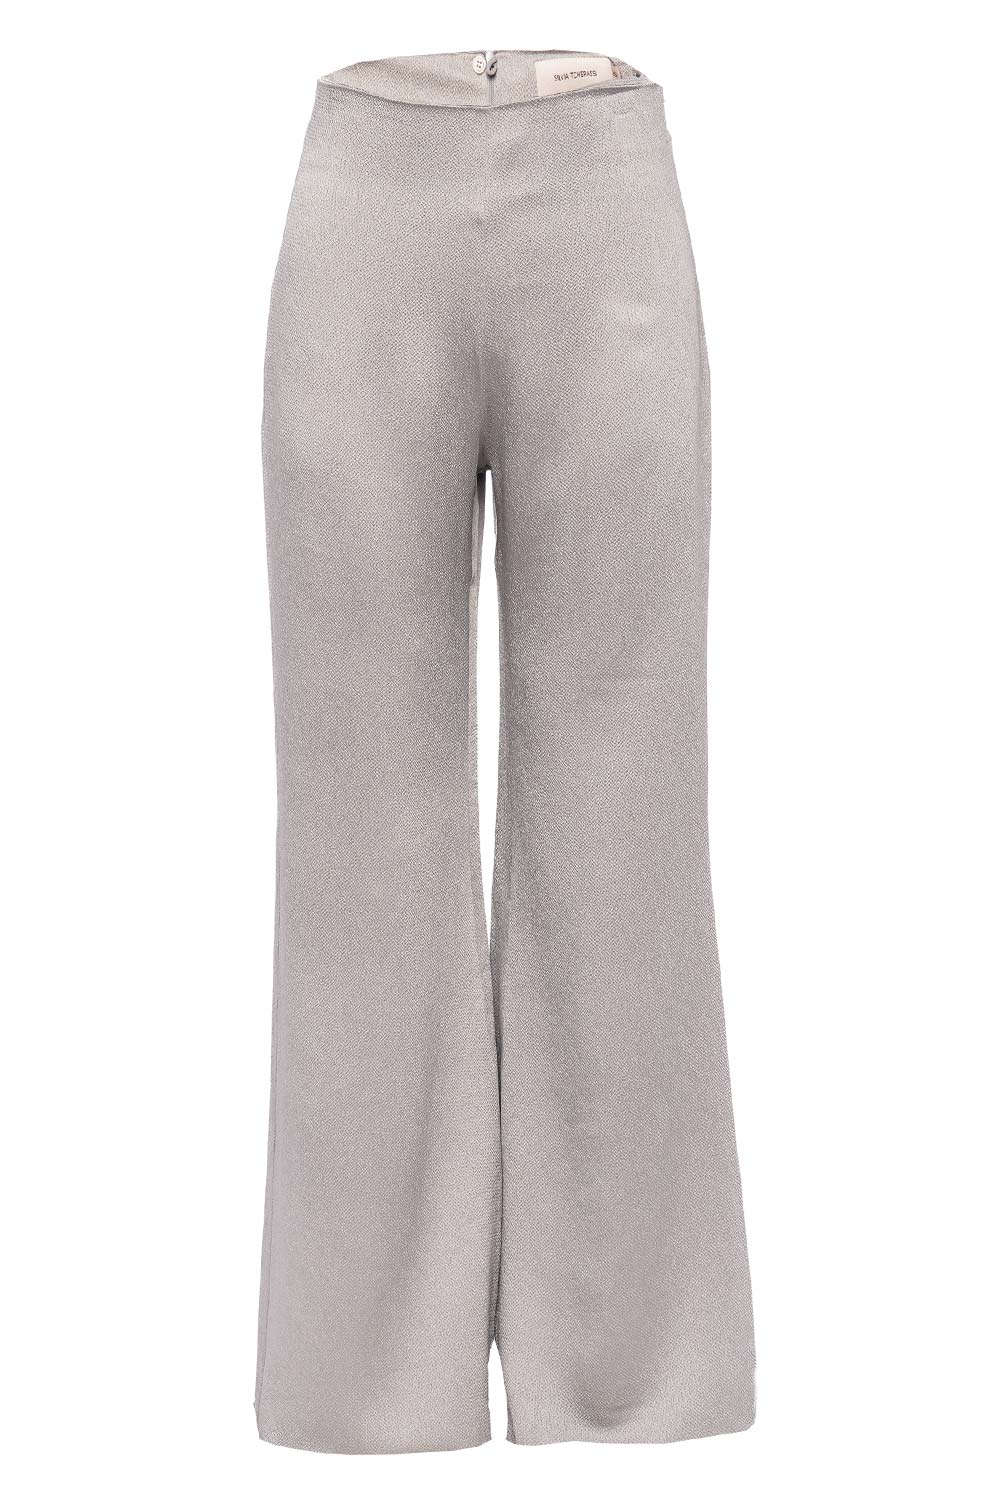 Silvia Tcherassi Andie Grey Silk Wide Leg Pants